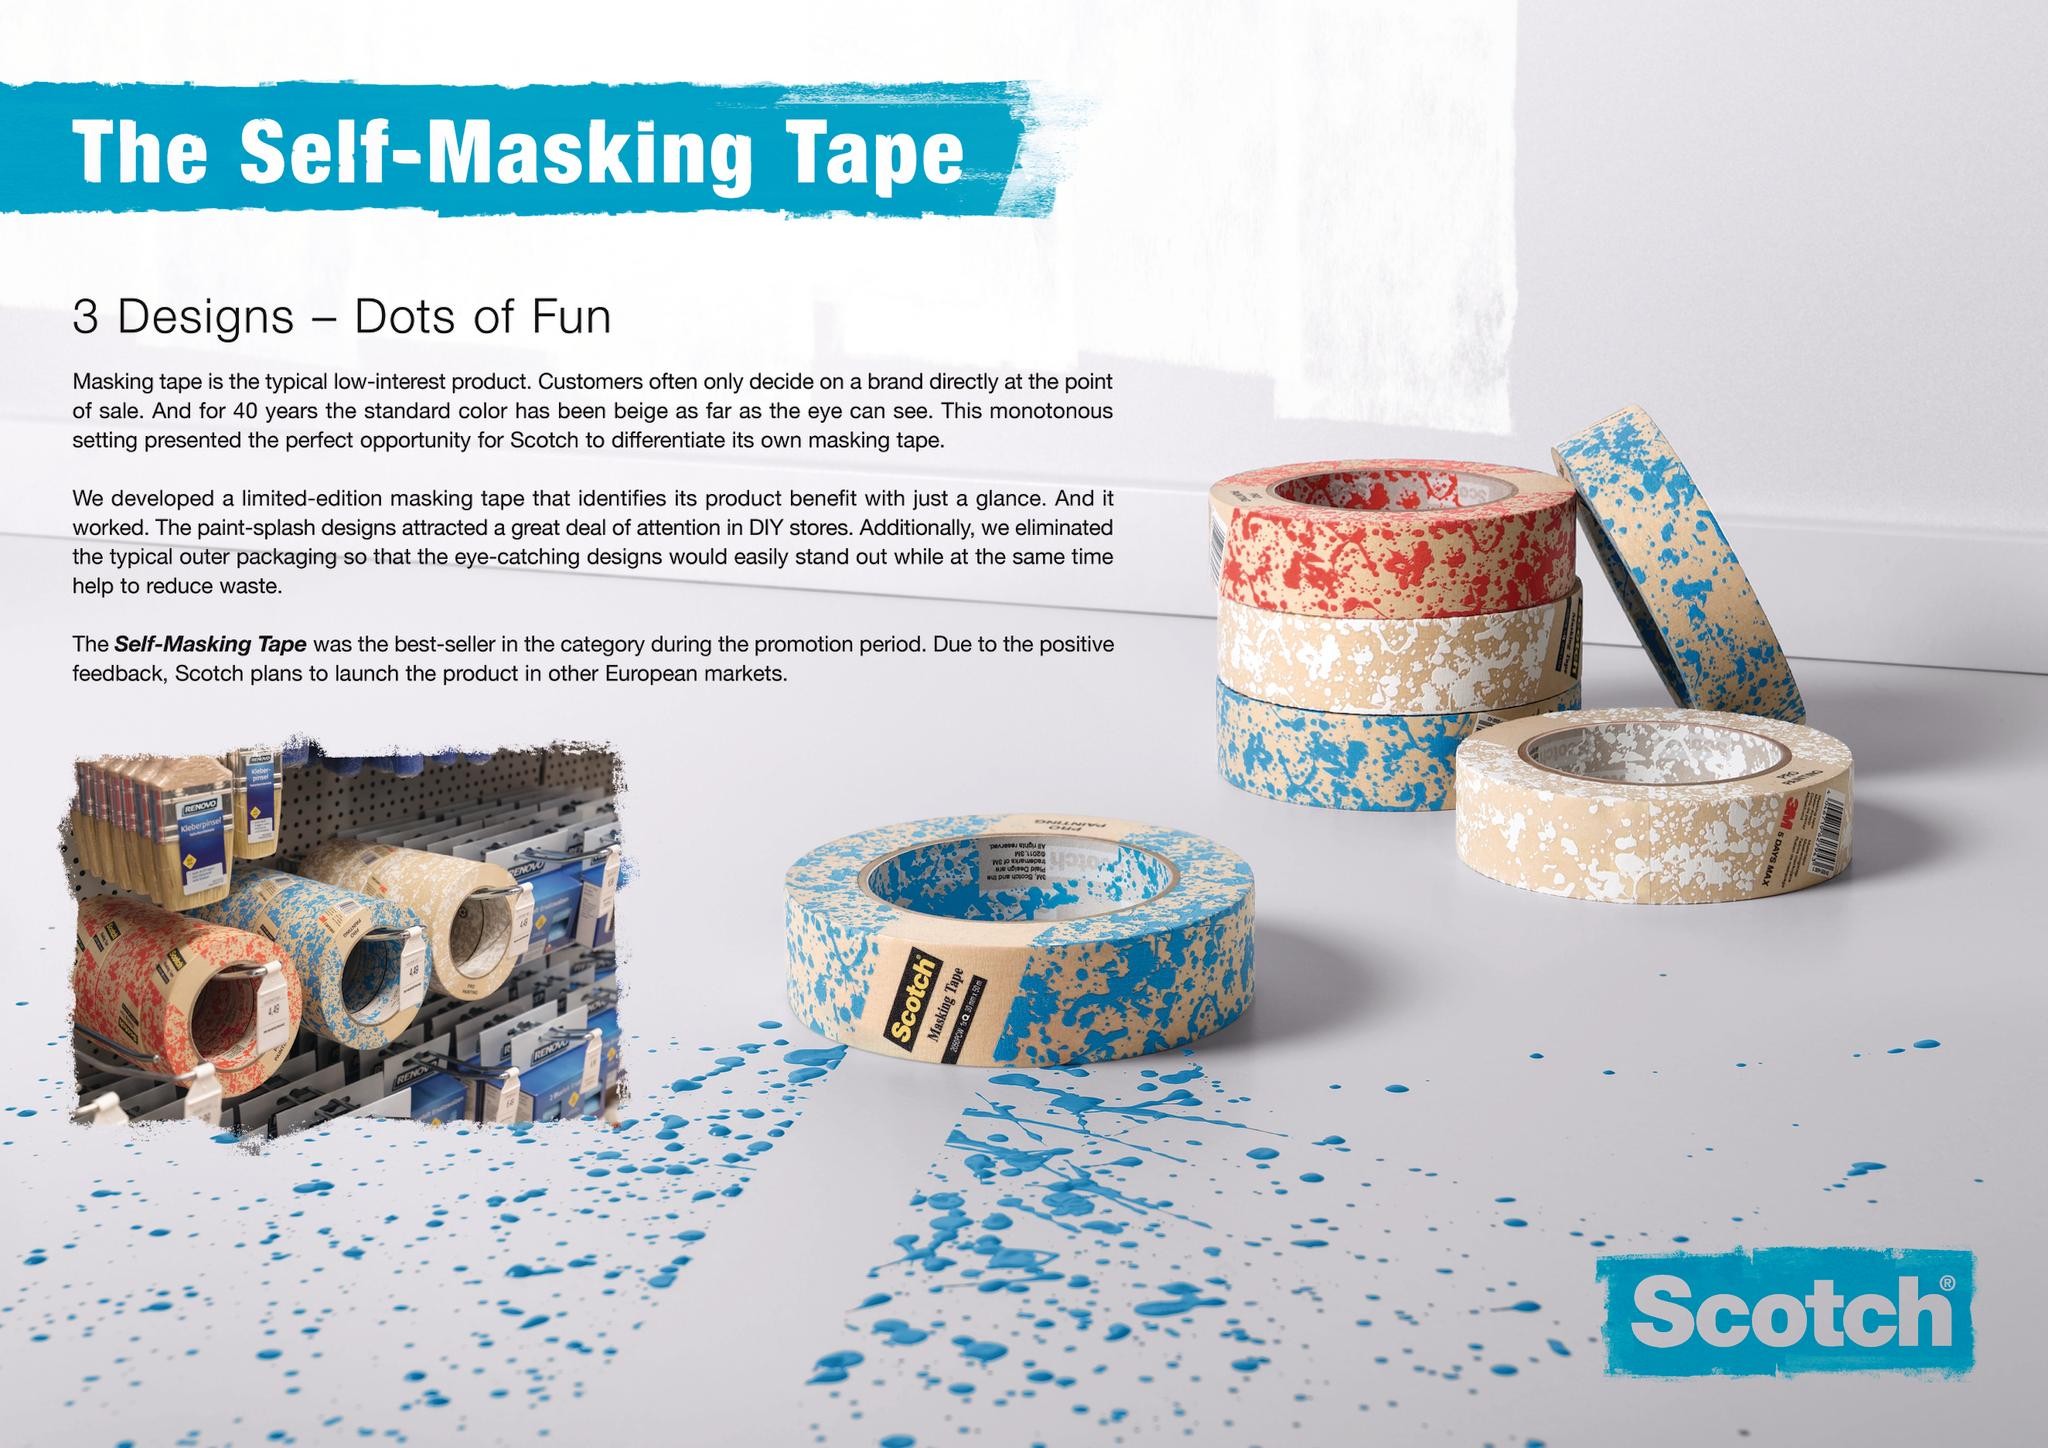 The Self-Masking Tape